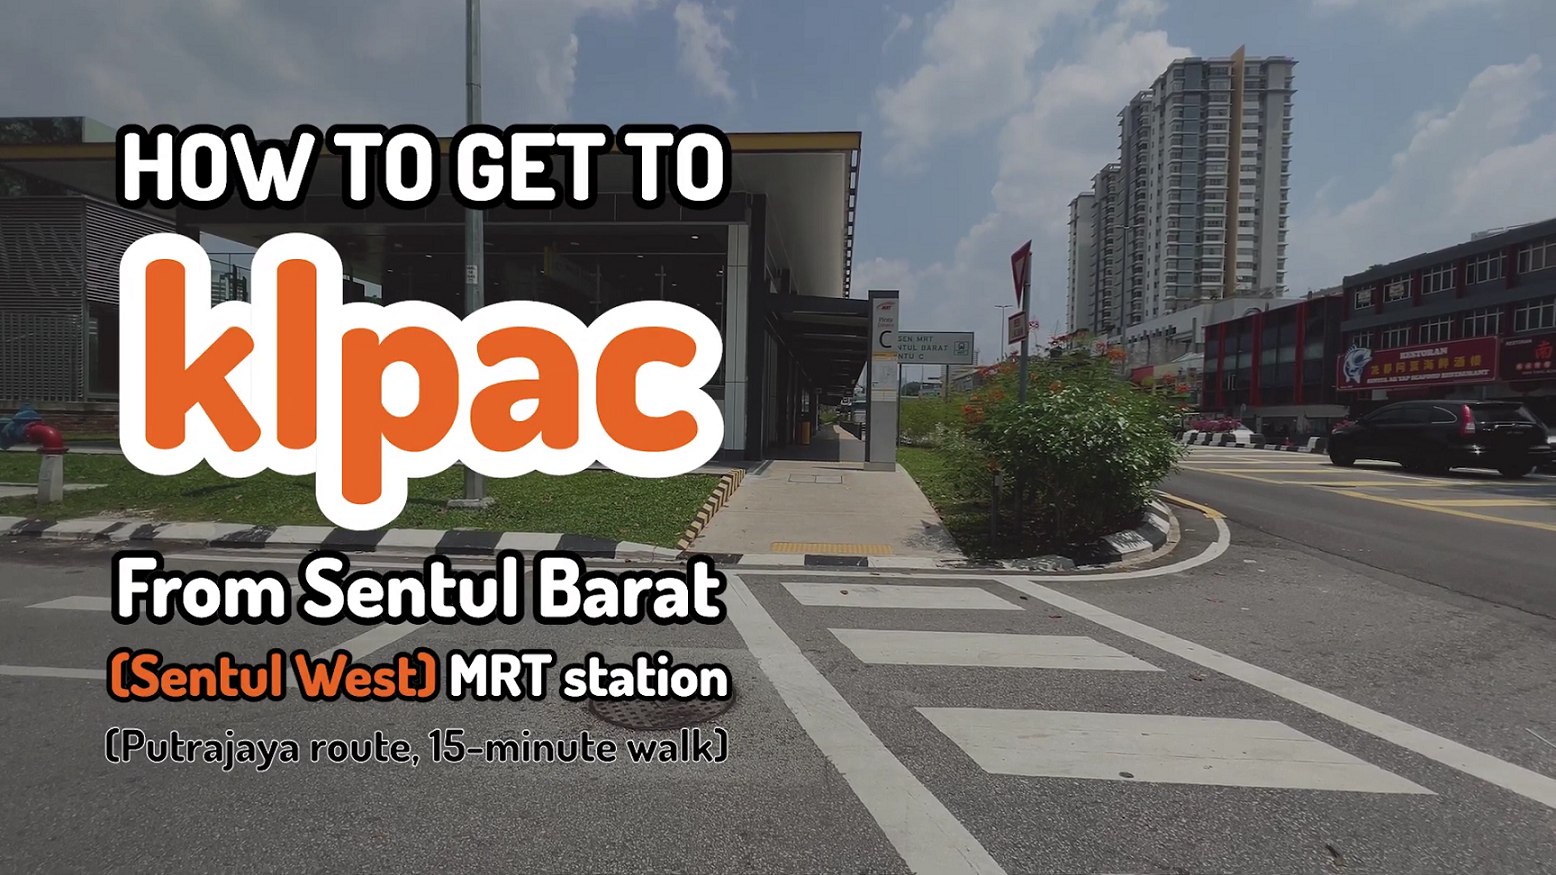 From Sentul Barat MRT Station